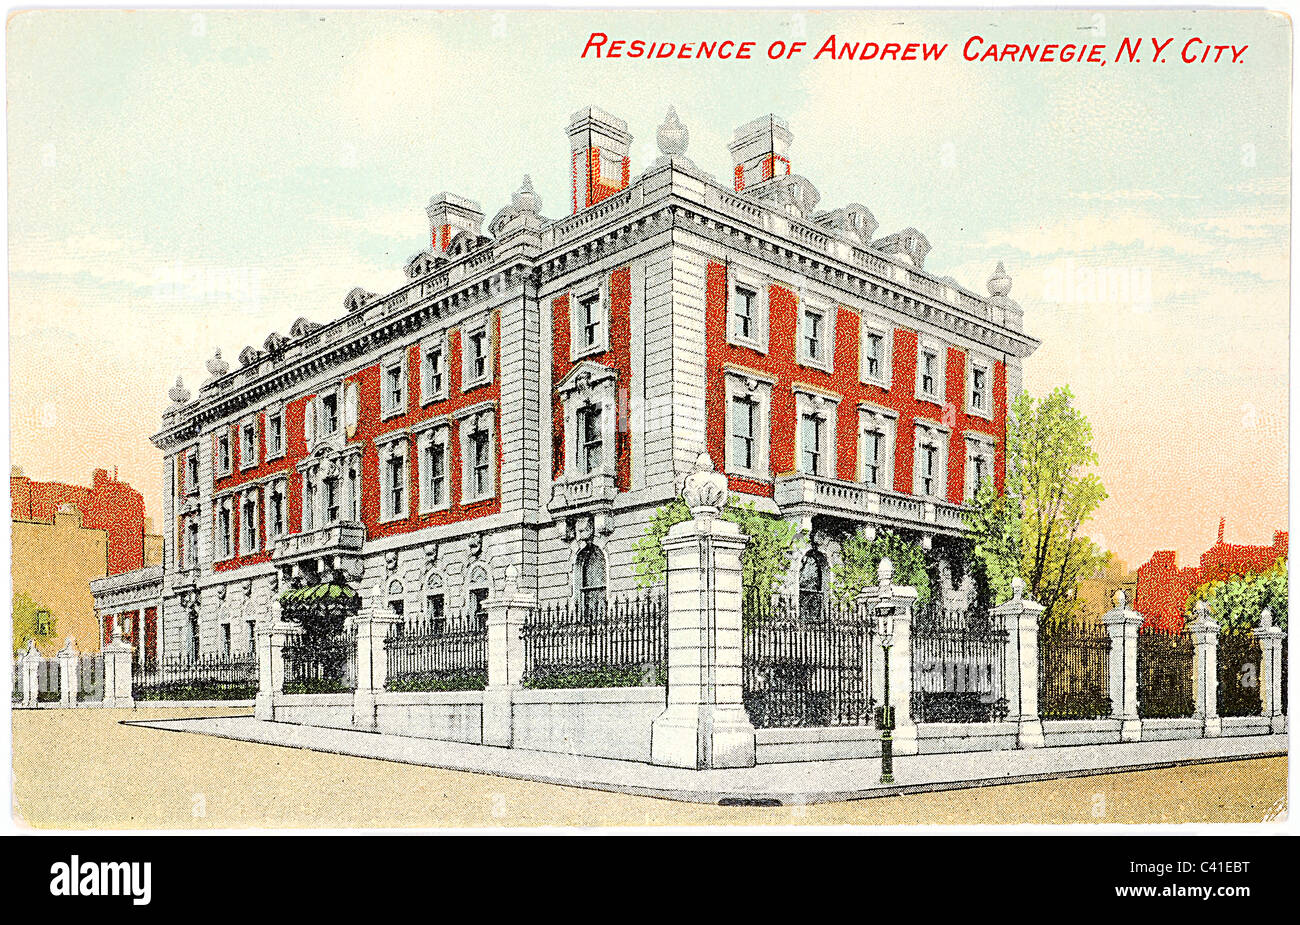 Carte postale vintage de Andrew Carnegie's New York City Residence Banque D'Images